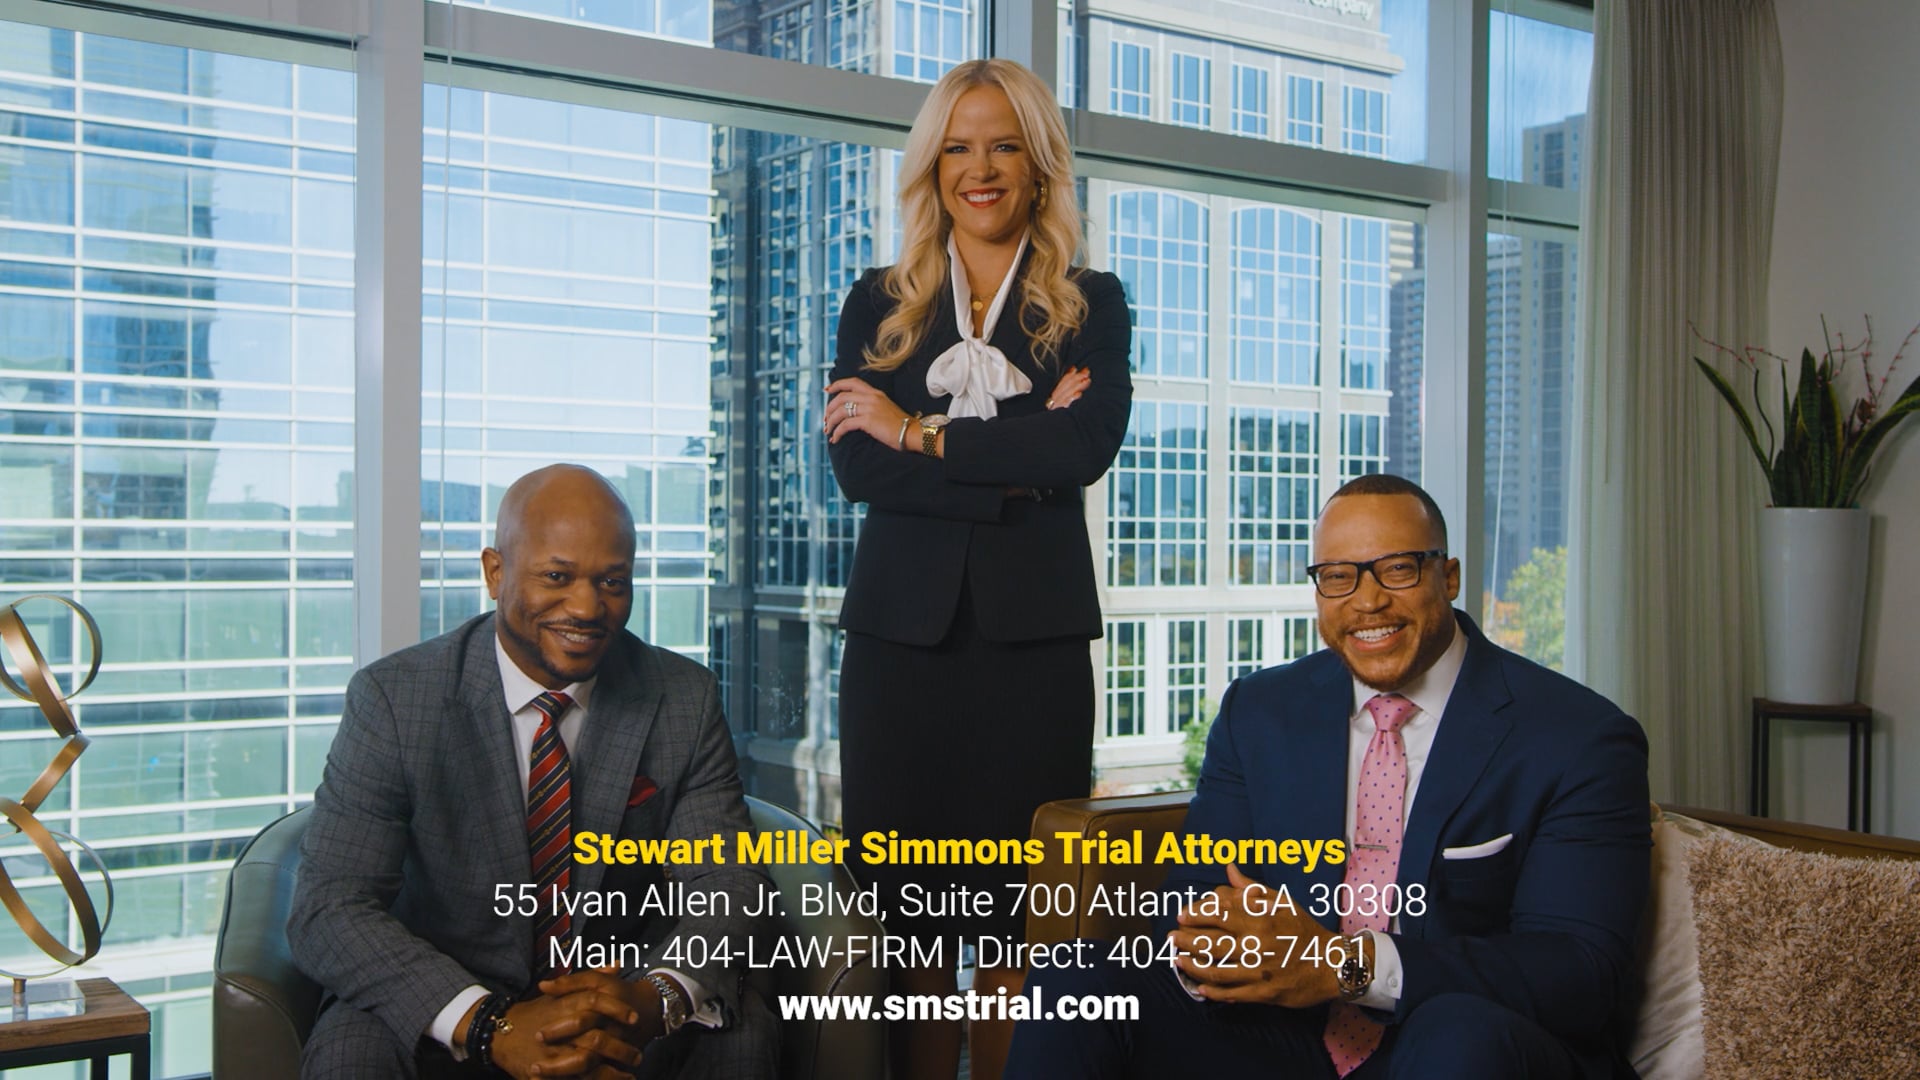 Stewart Miller Simmons “Your Injury Case Matters”